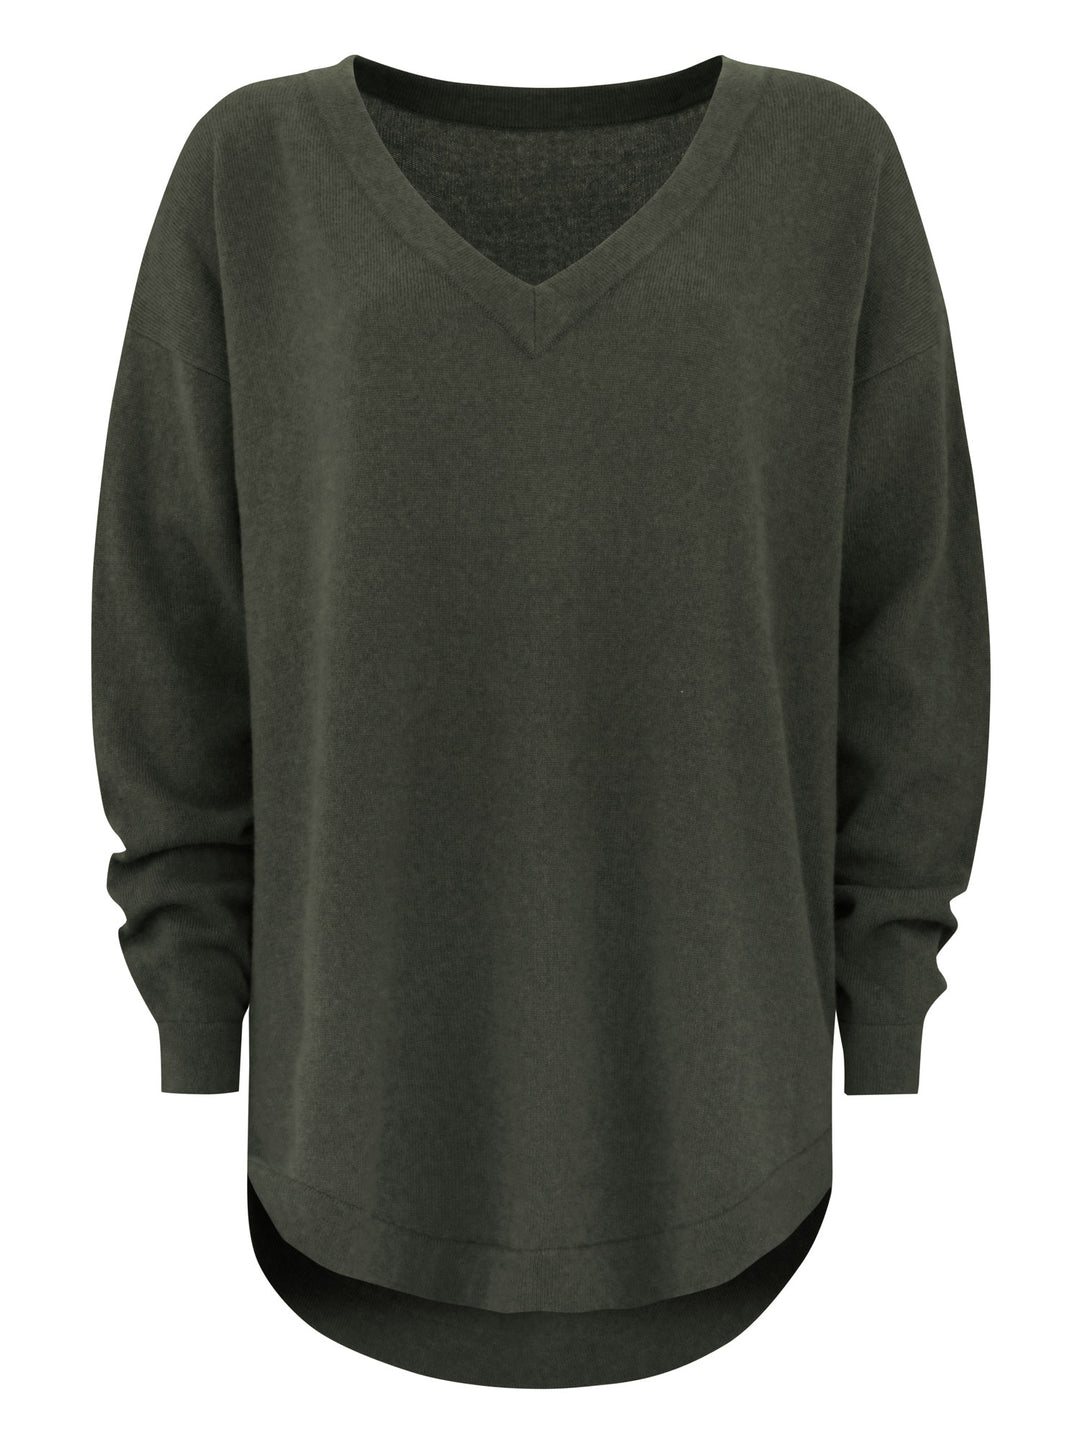 cashmere sweater v-neck from Kashmina 100% pure cashmere